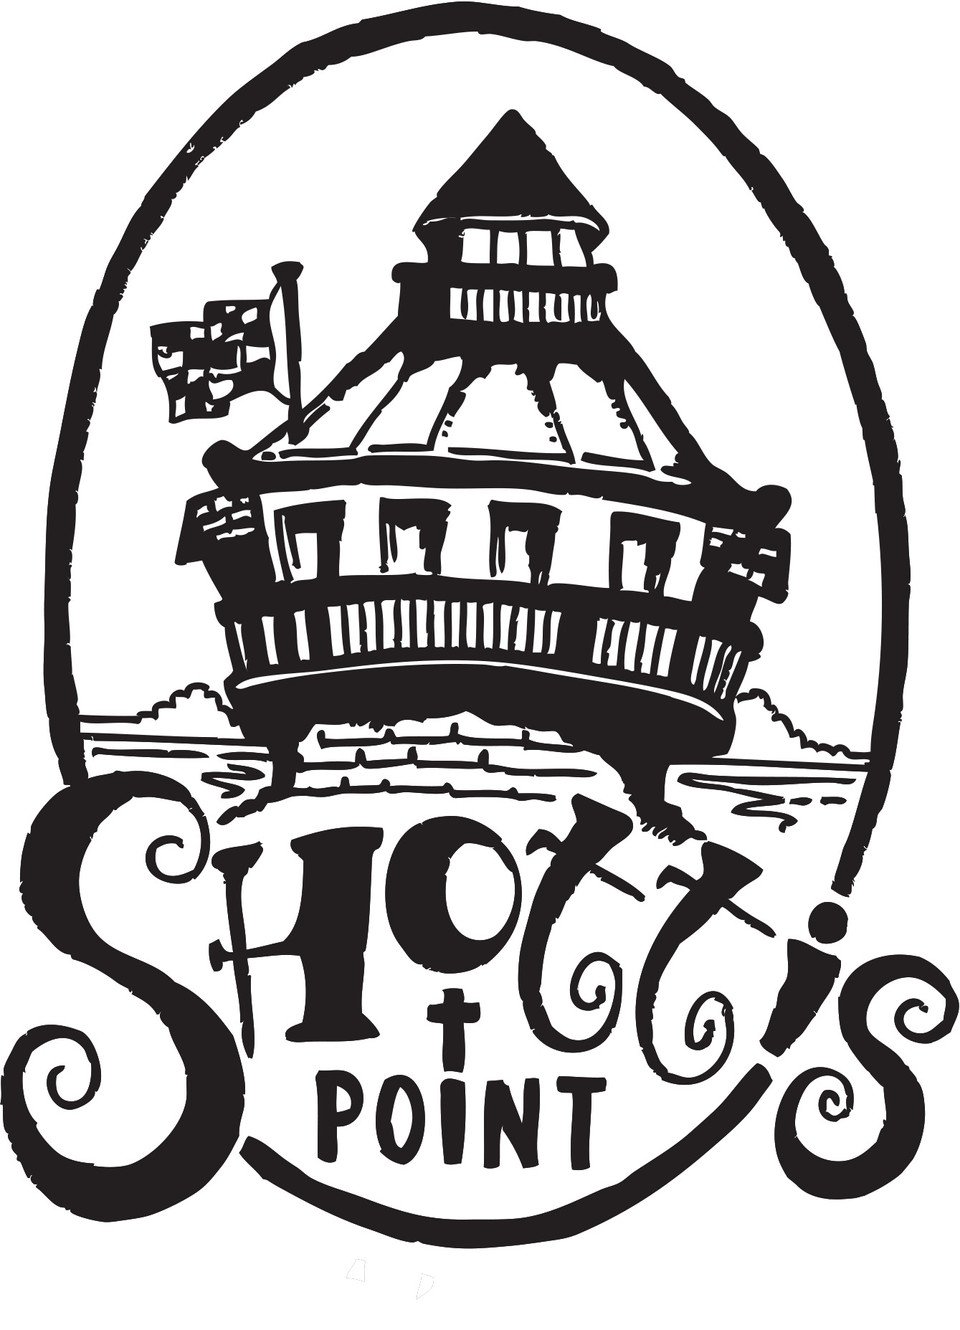 shottis point logo.jpeg